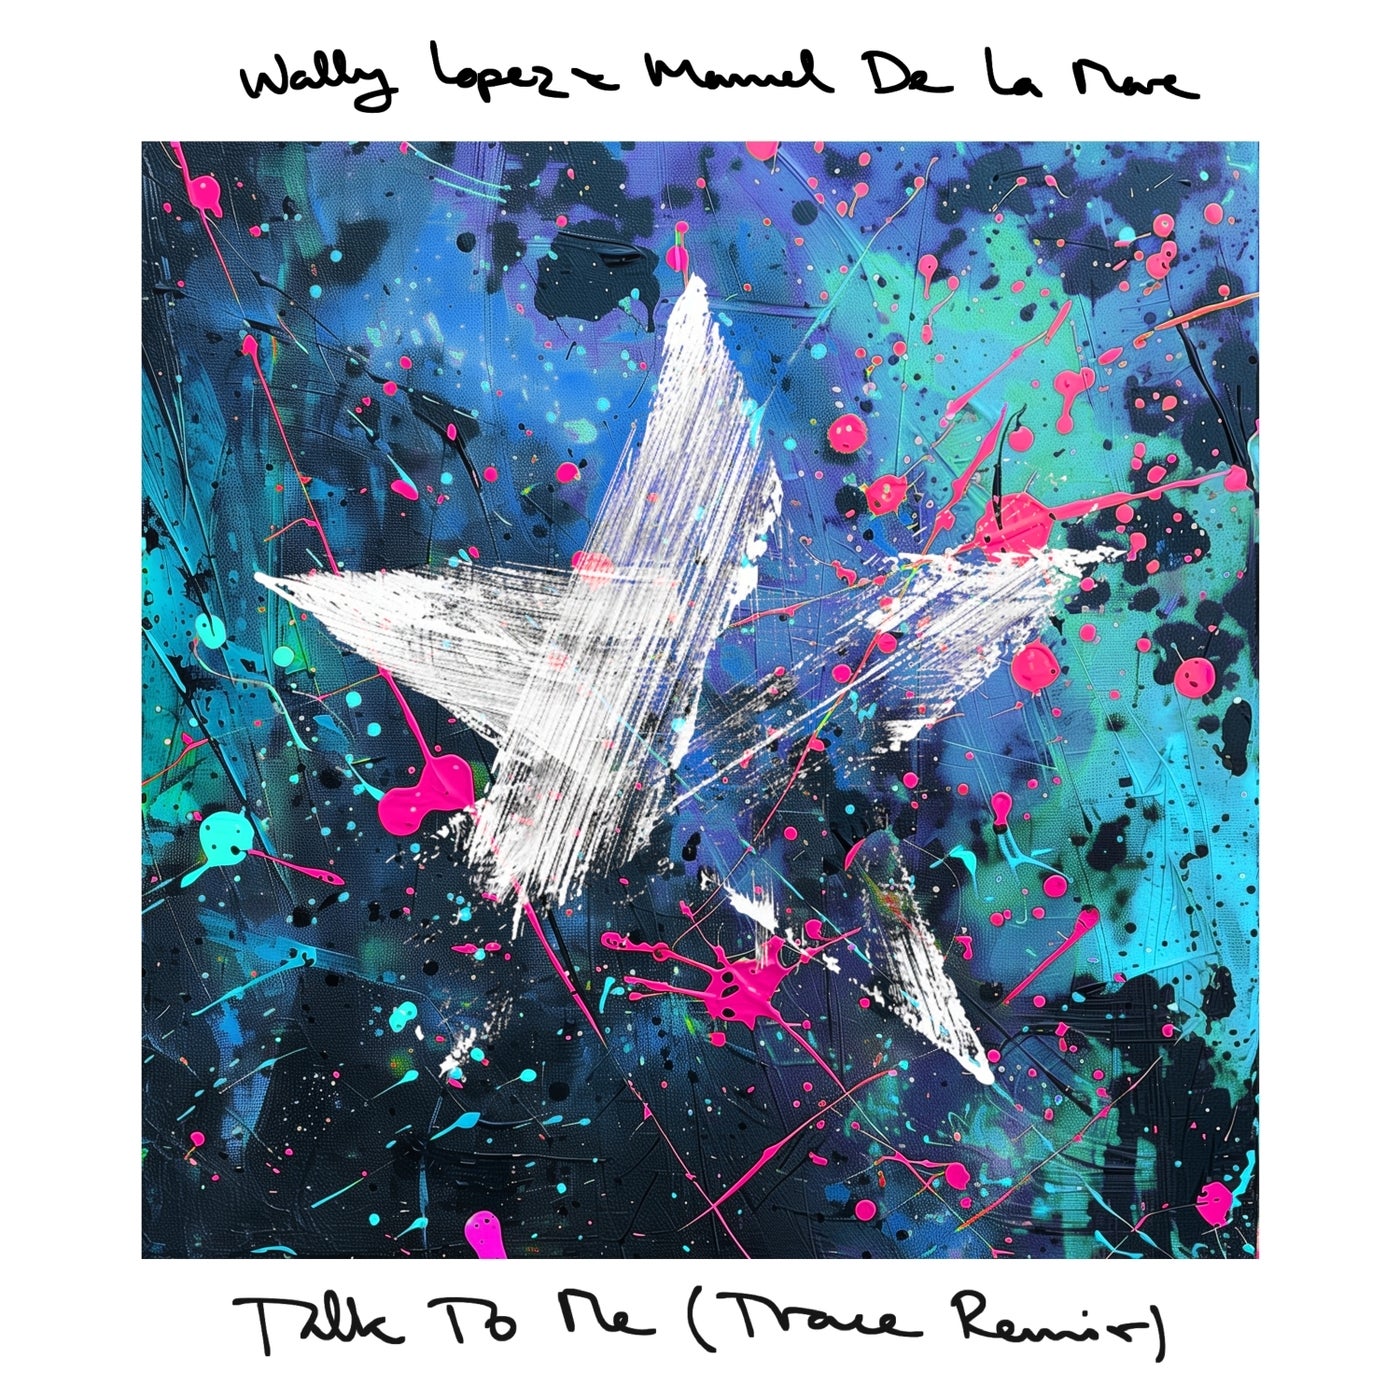 image cover: Wally Lopez, Manuel De La Mare - Talk to Me Trace Remix on Hotfingers